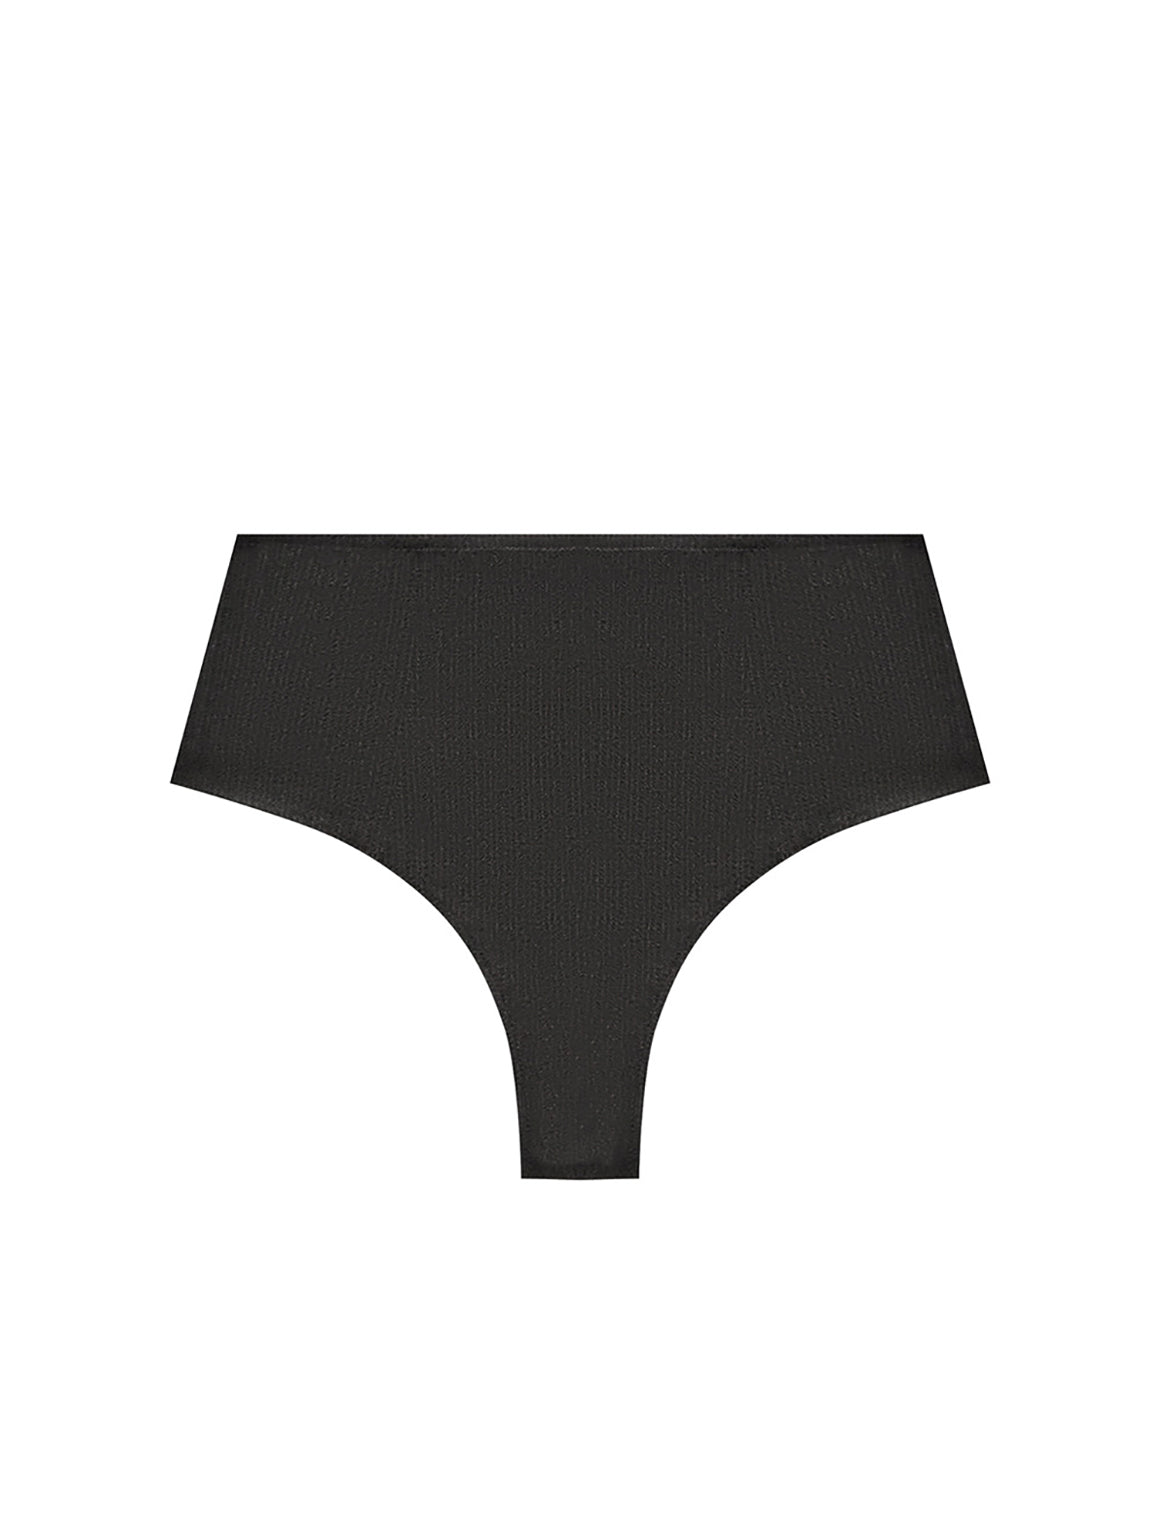 South Pacific Bikini Bottom | Black Texture